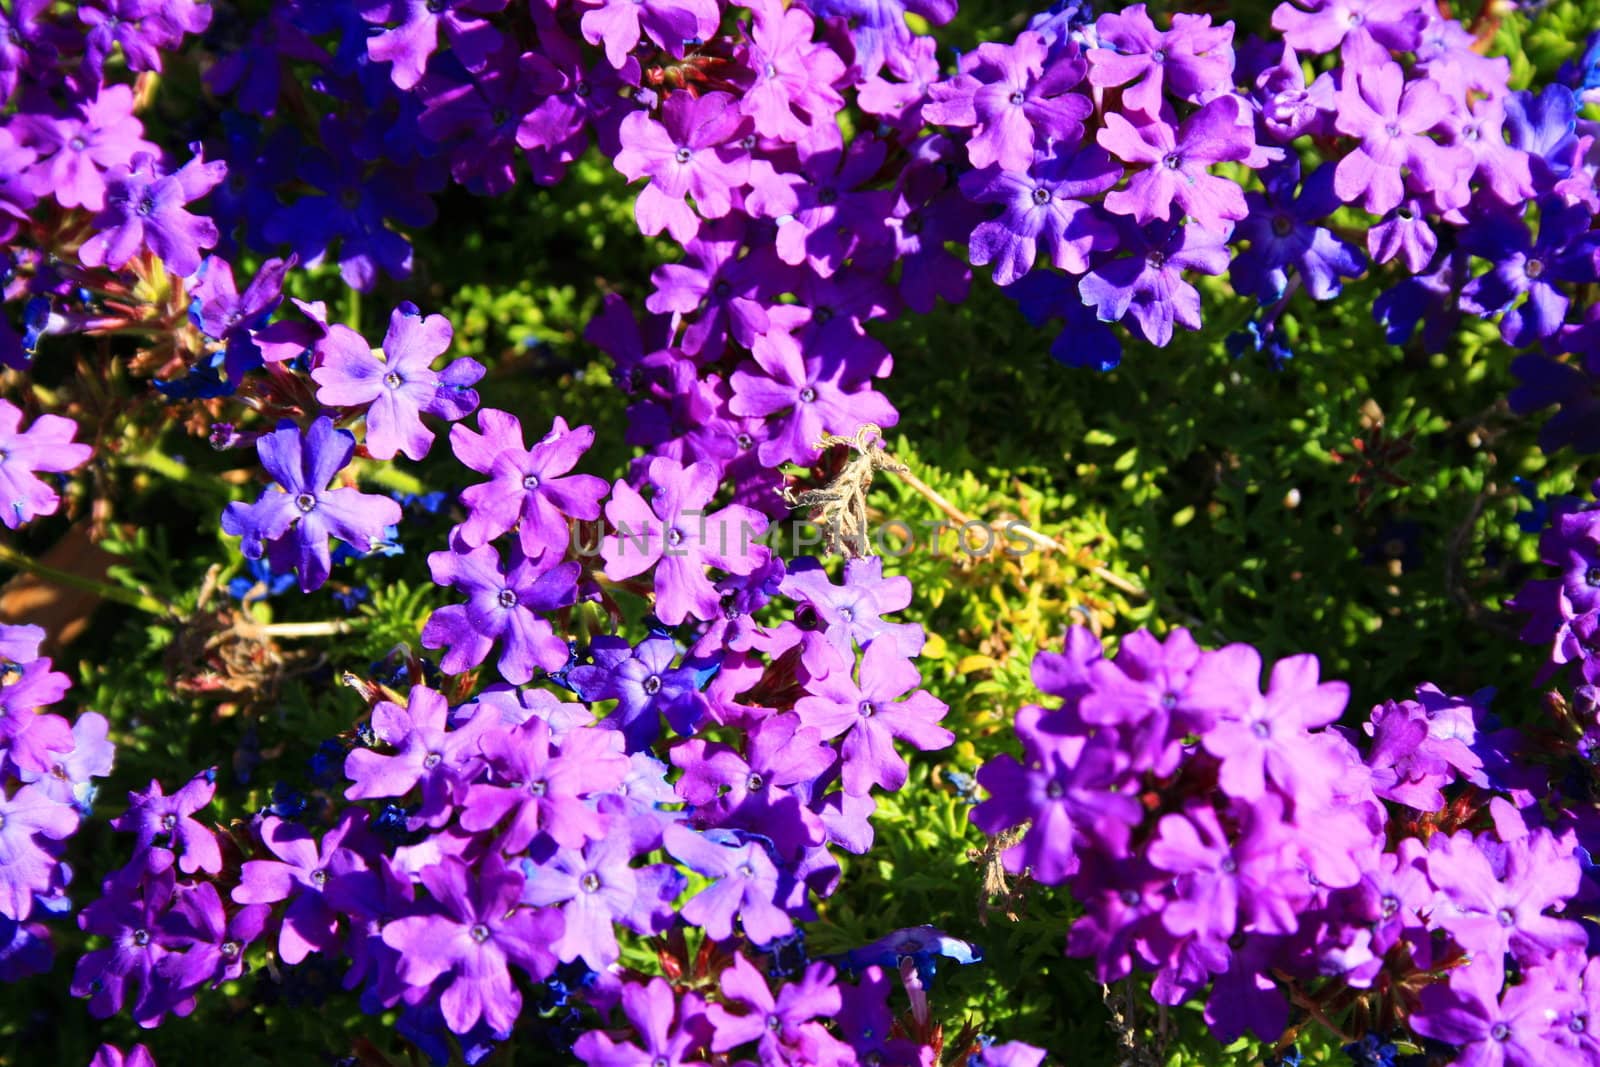 Purple lantana flowers close up on a sunny day.
